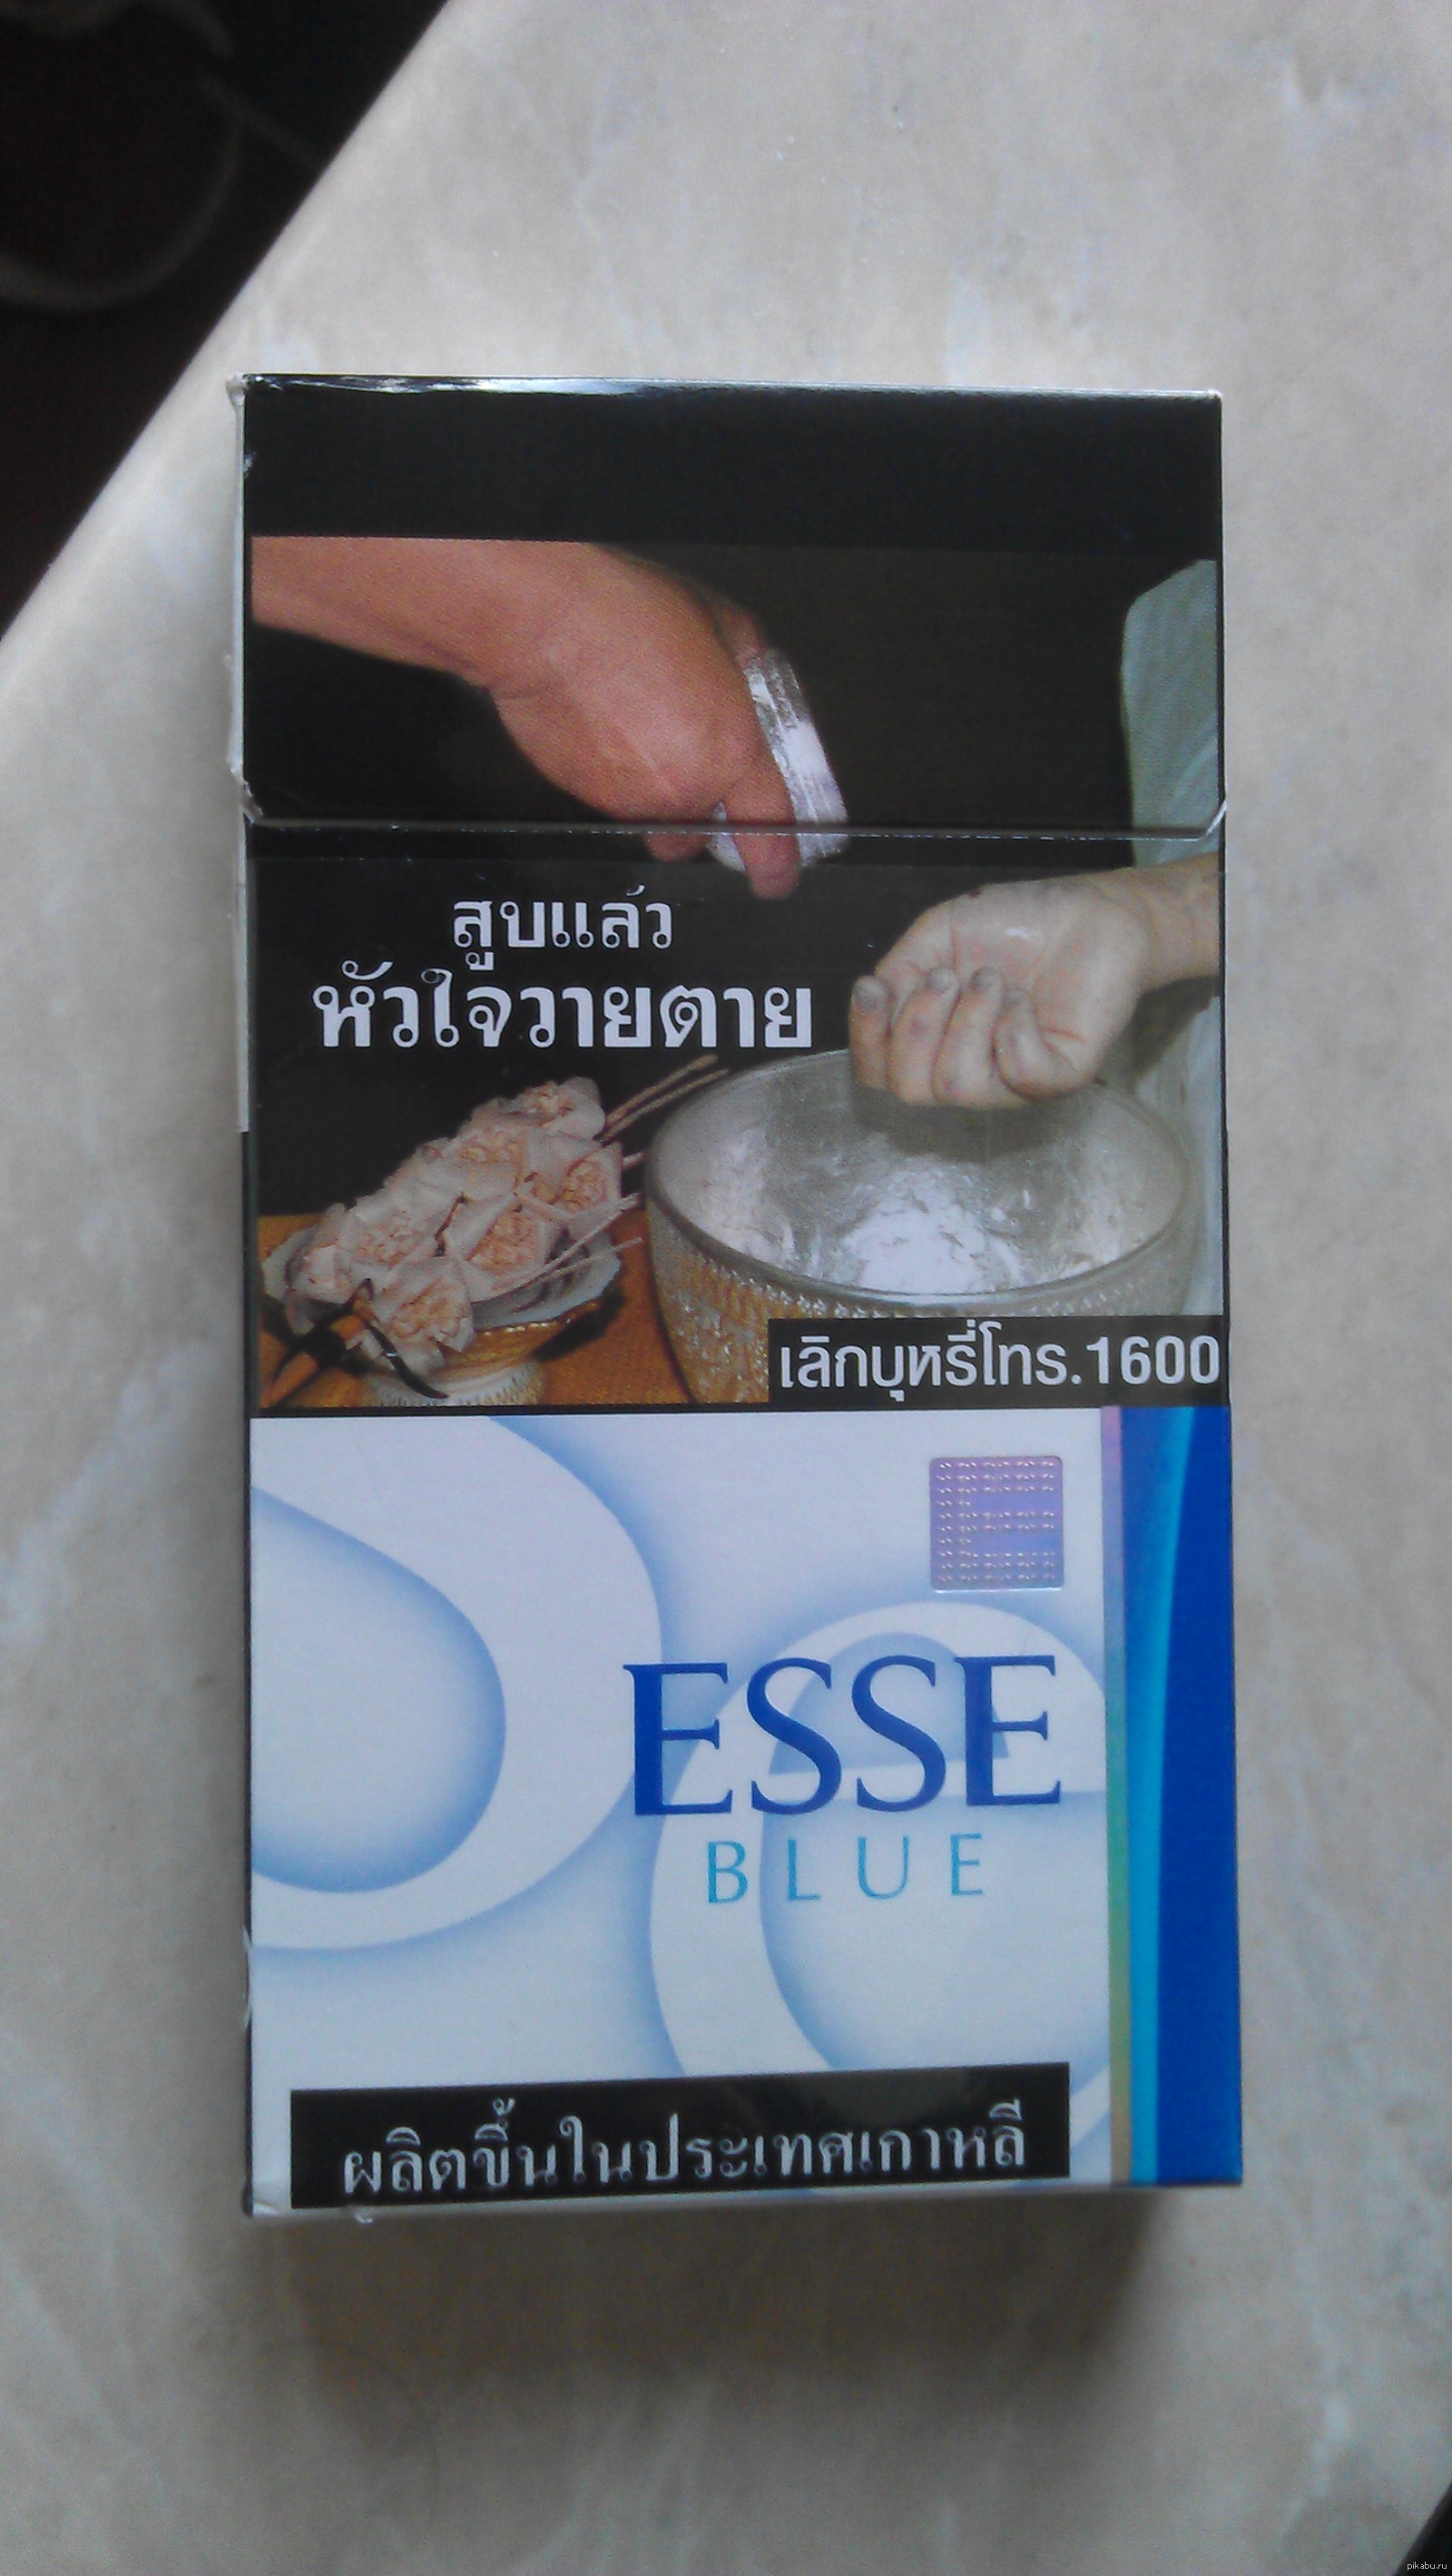 сигареты в тайланде